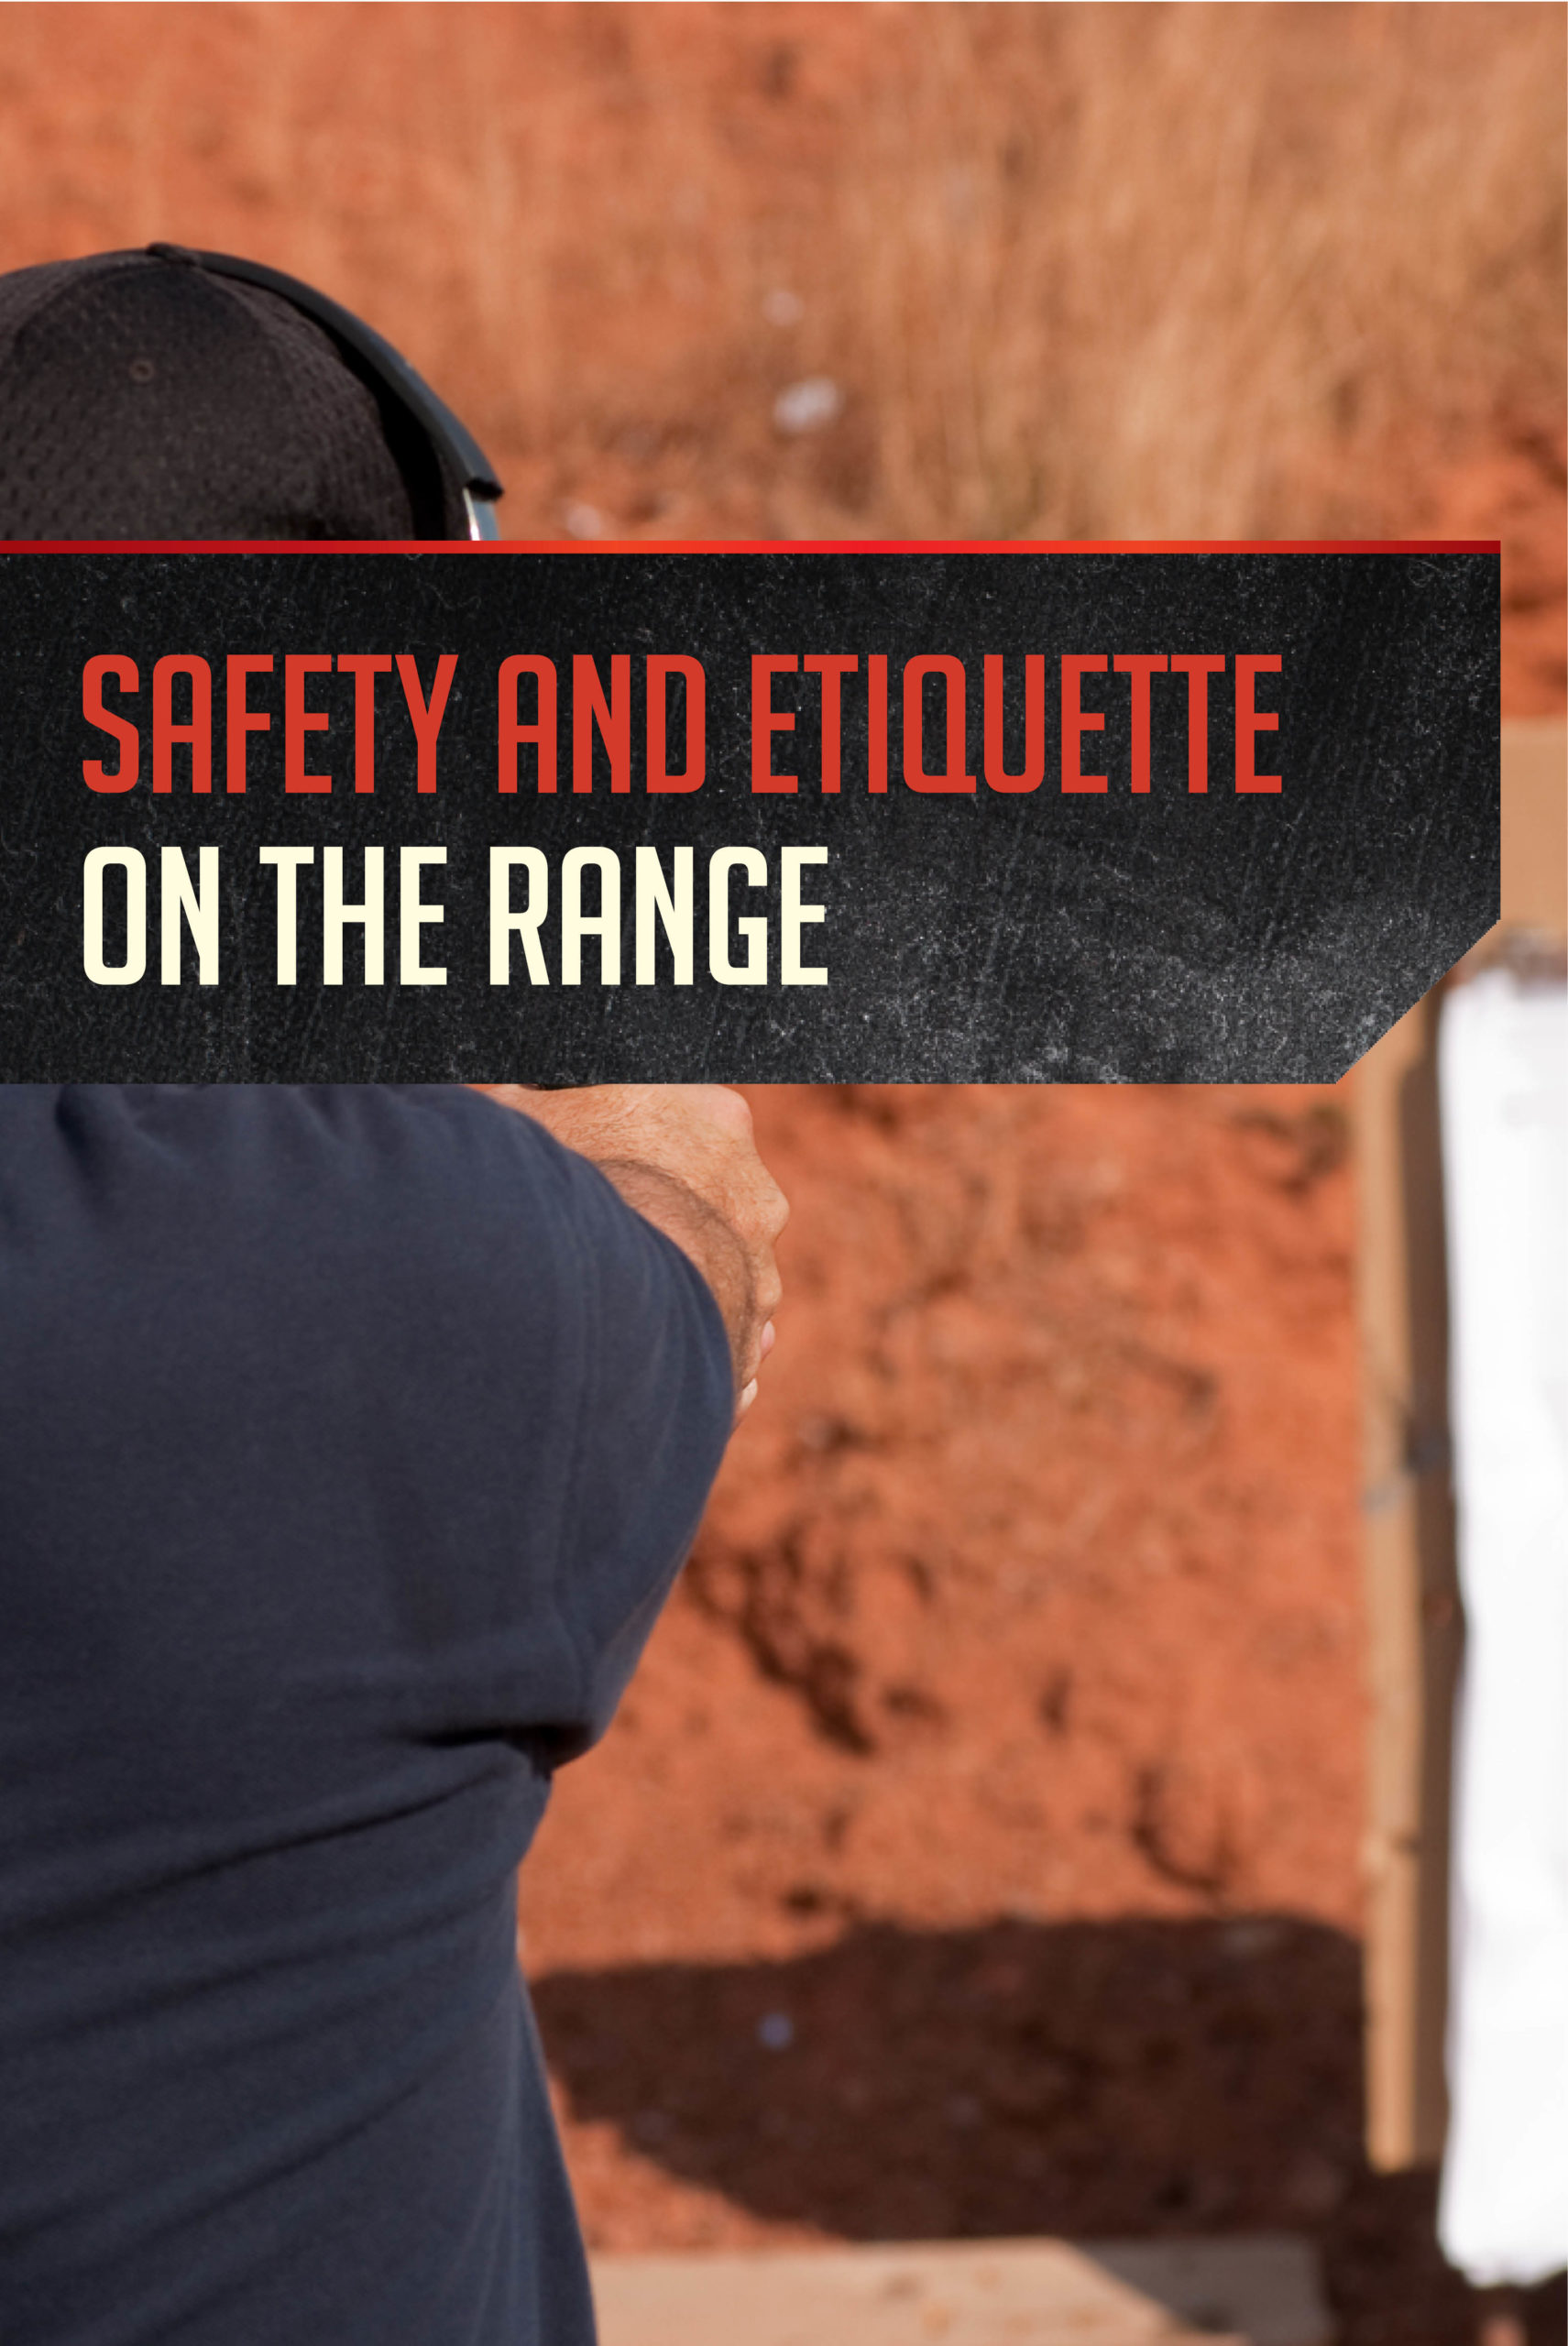 Shooting Range Safety and Etiquette pt. 1 by Gun Carrier at https://guncarriernews.wpengine.com/shooting-range-safety-etiquette